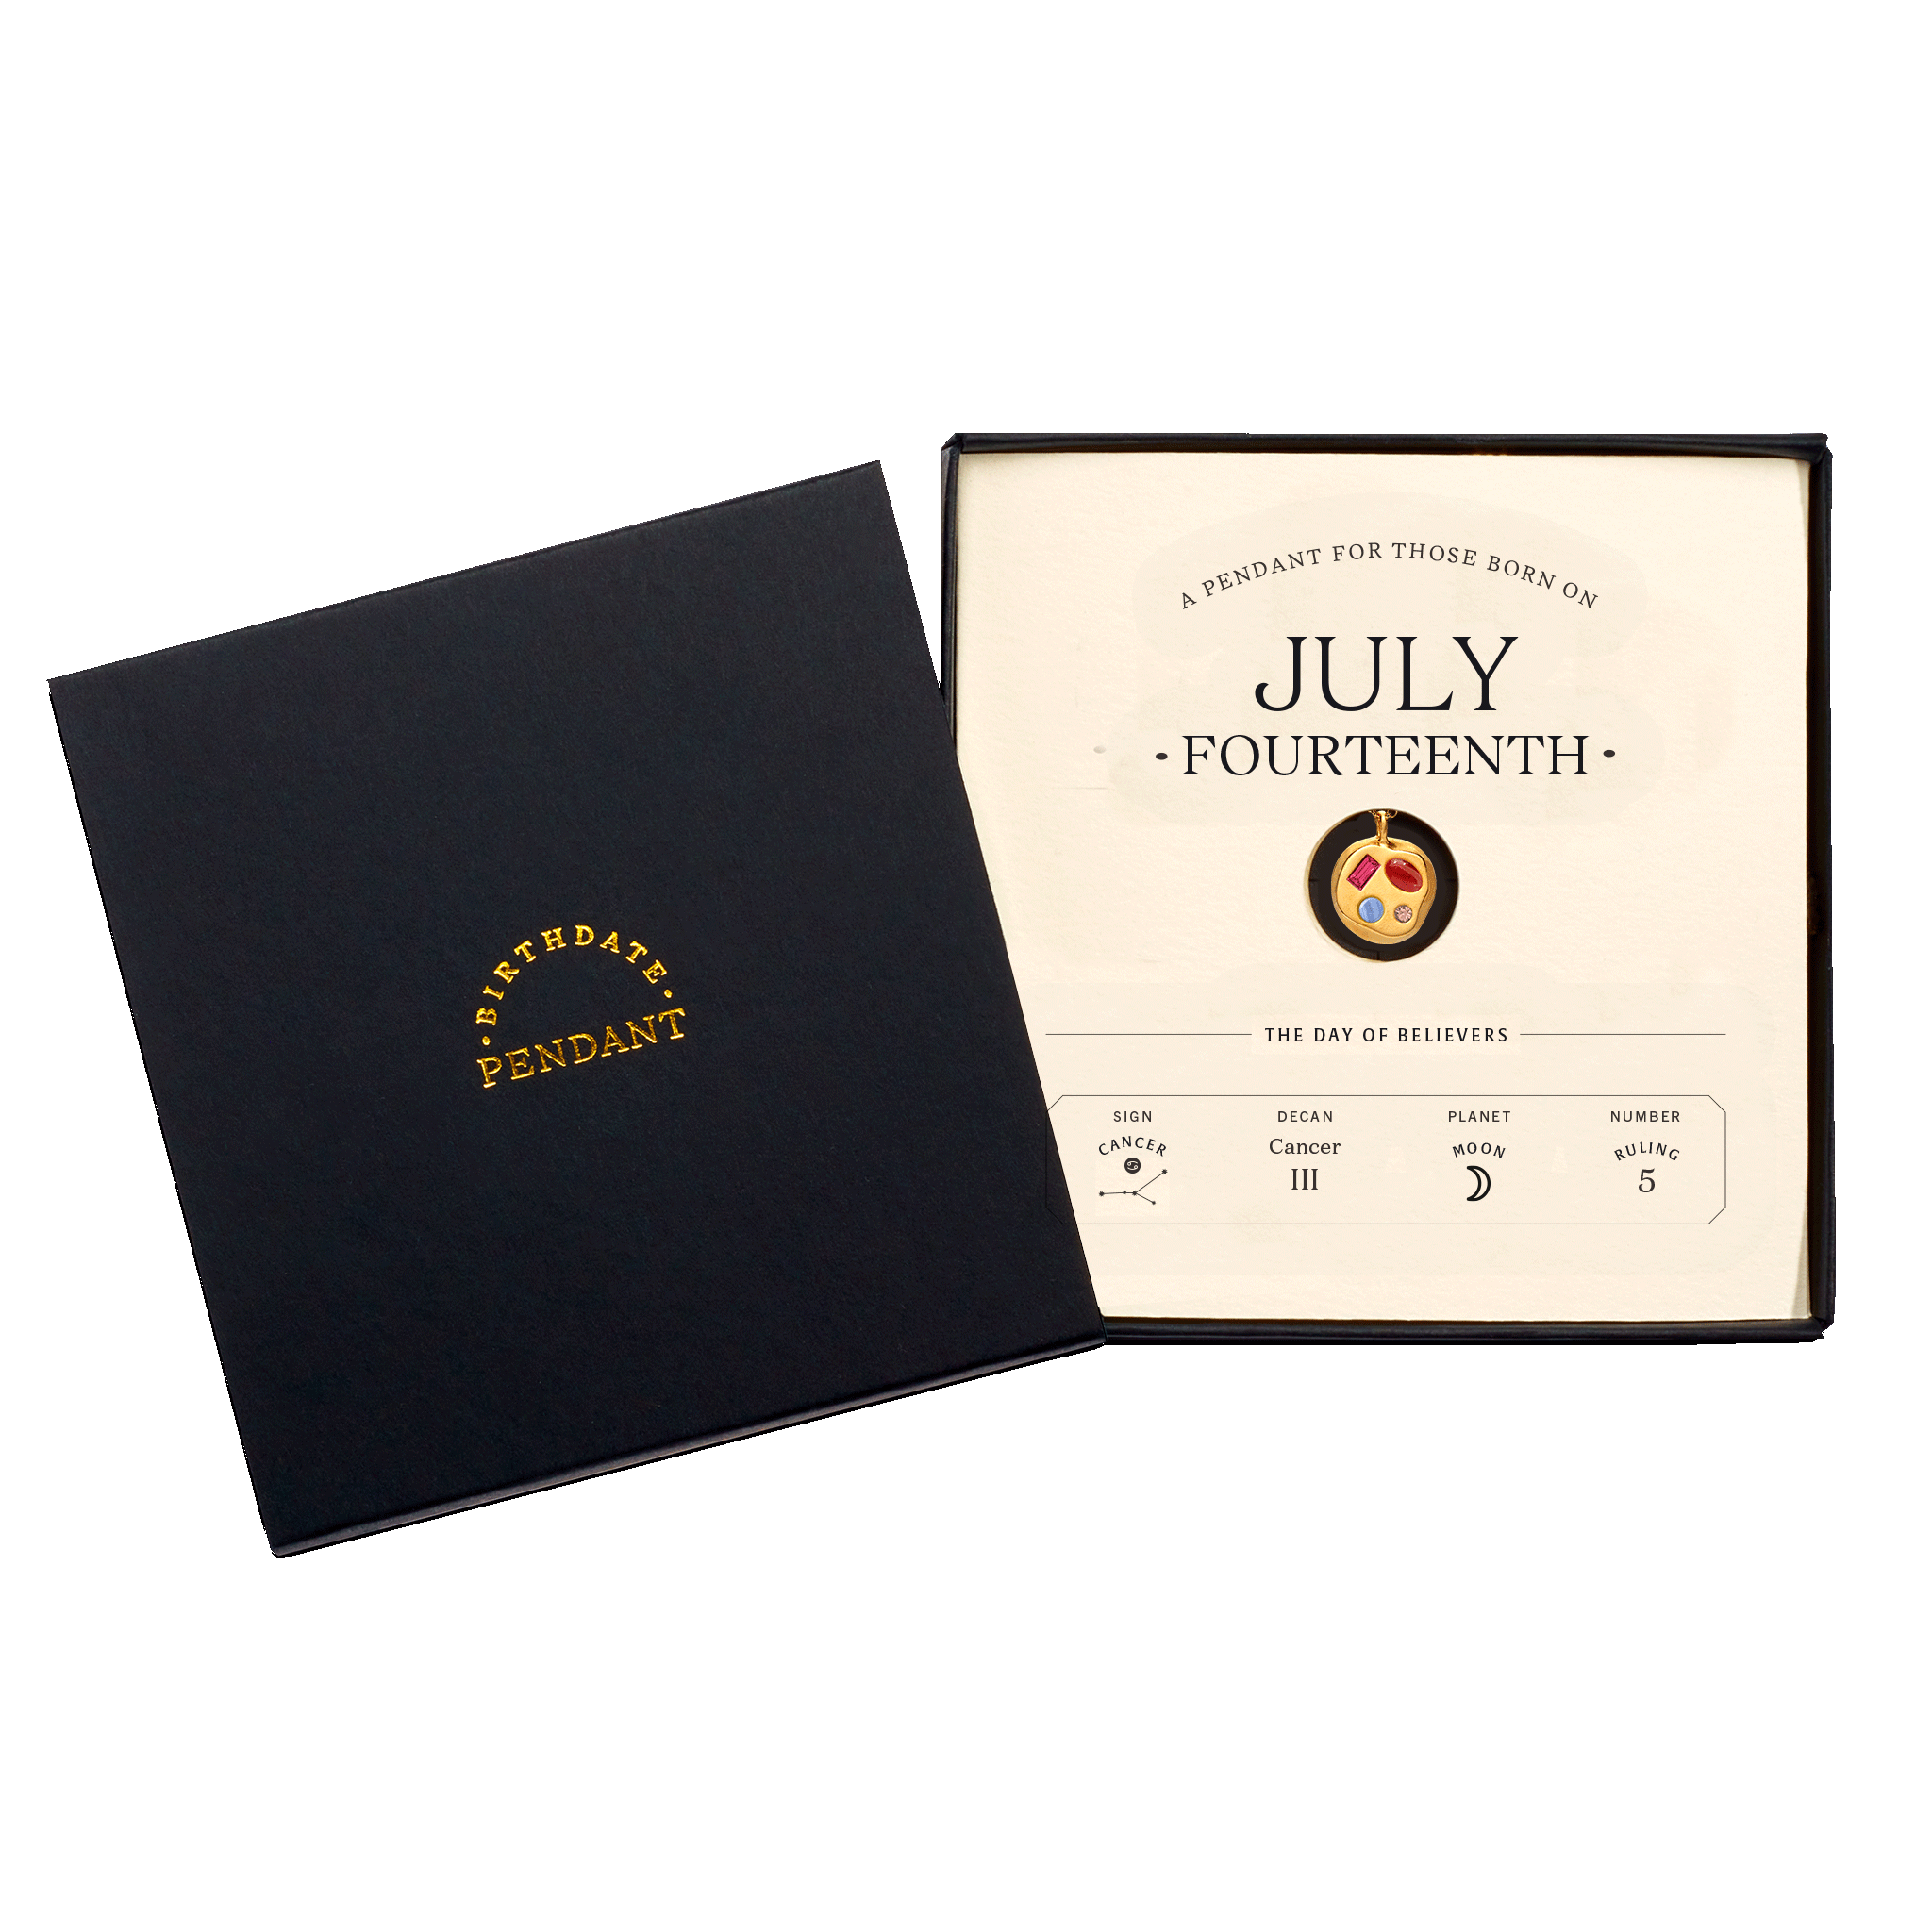 The July Fourteenth Pendant inside its box